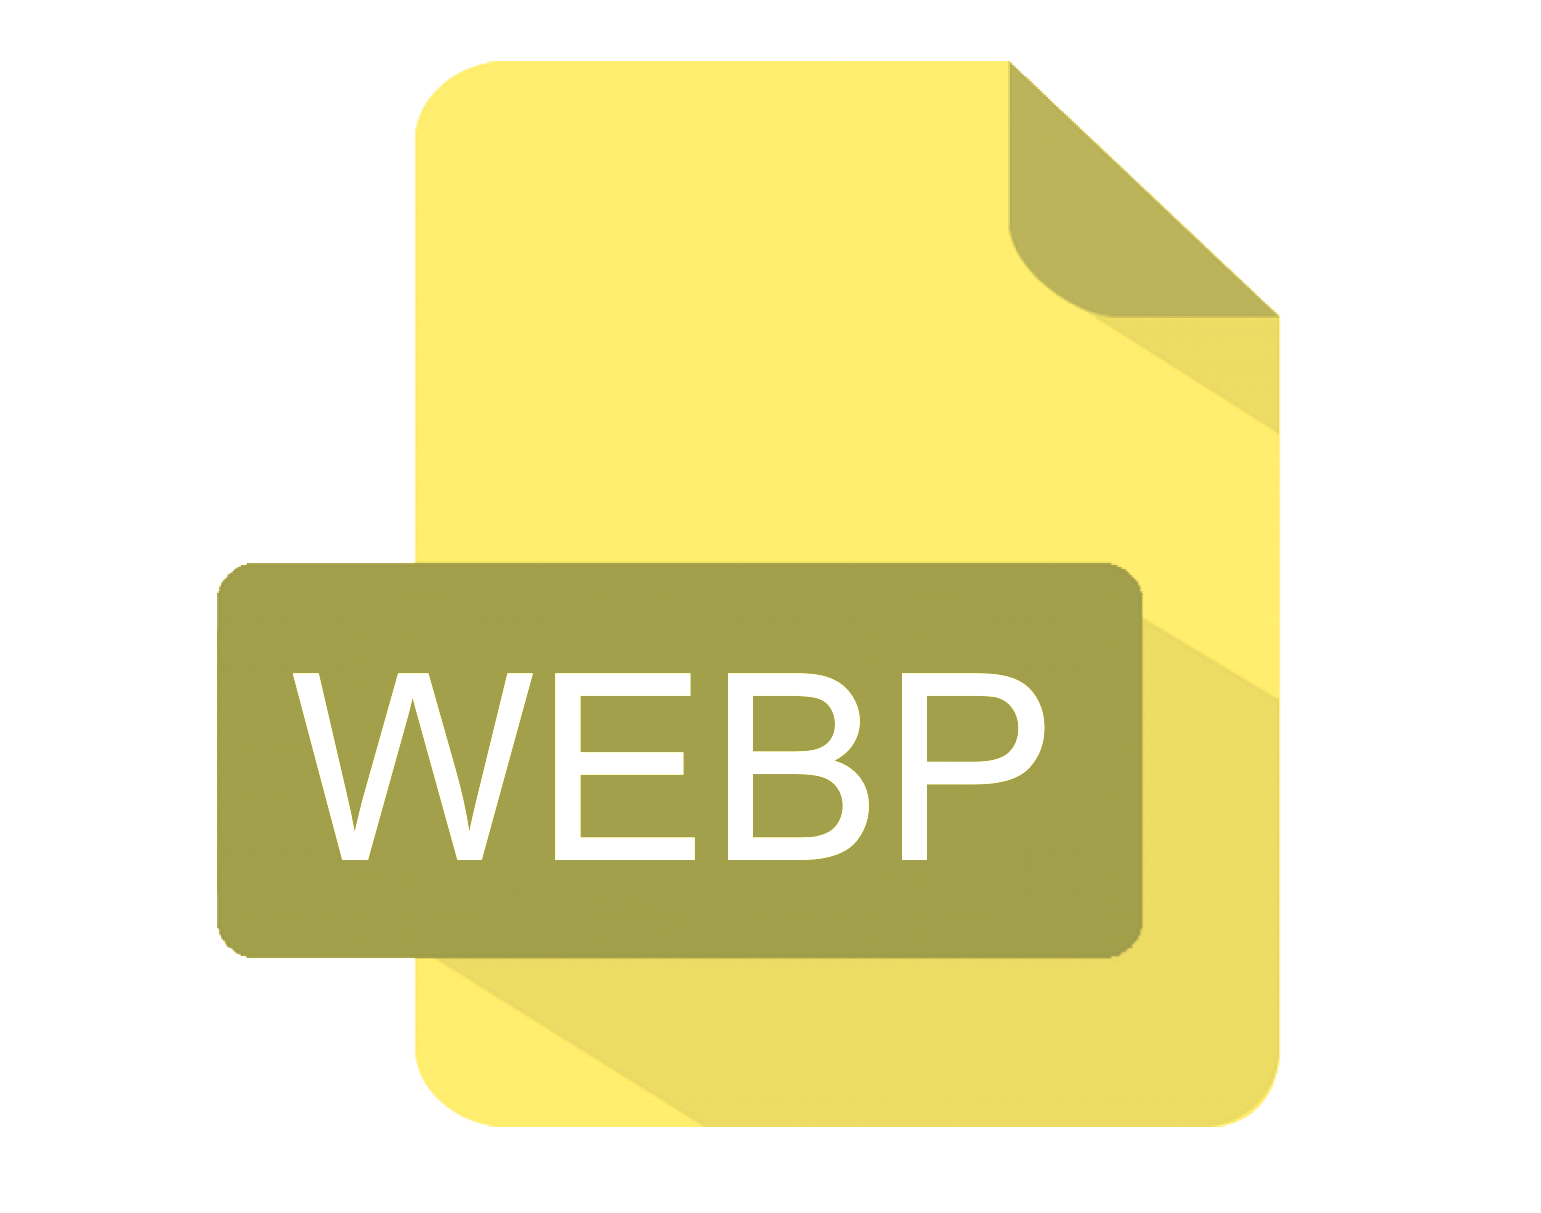 png to webp converter